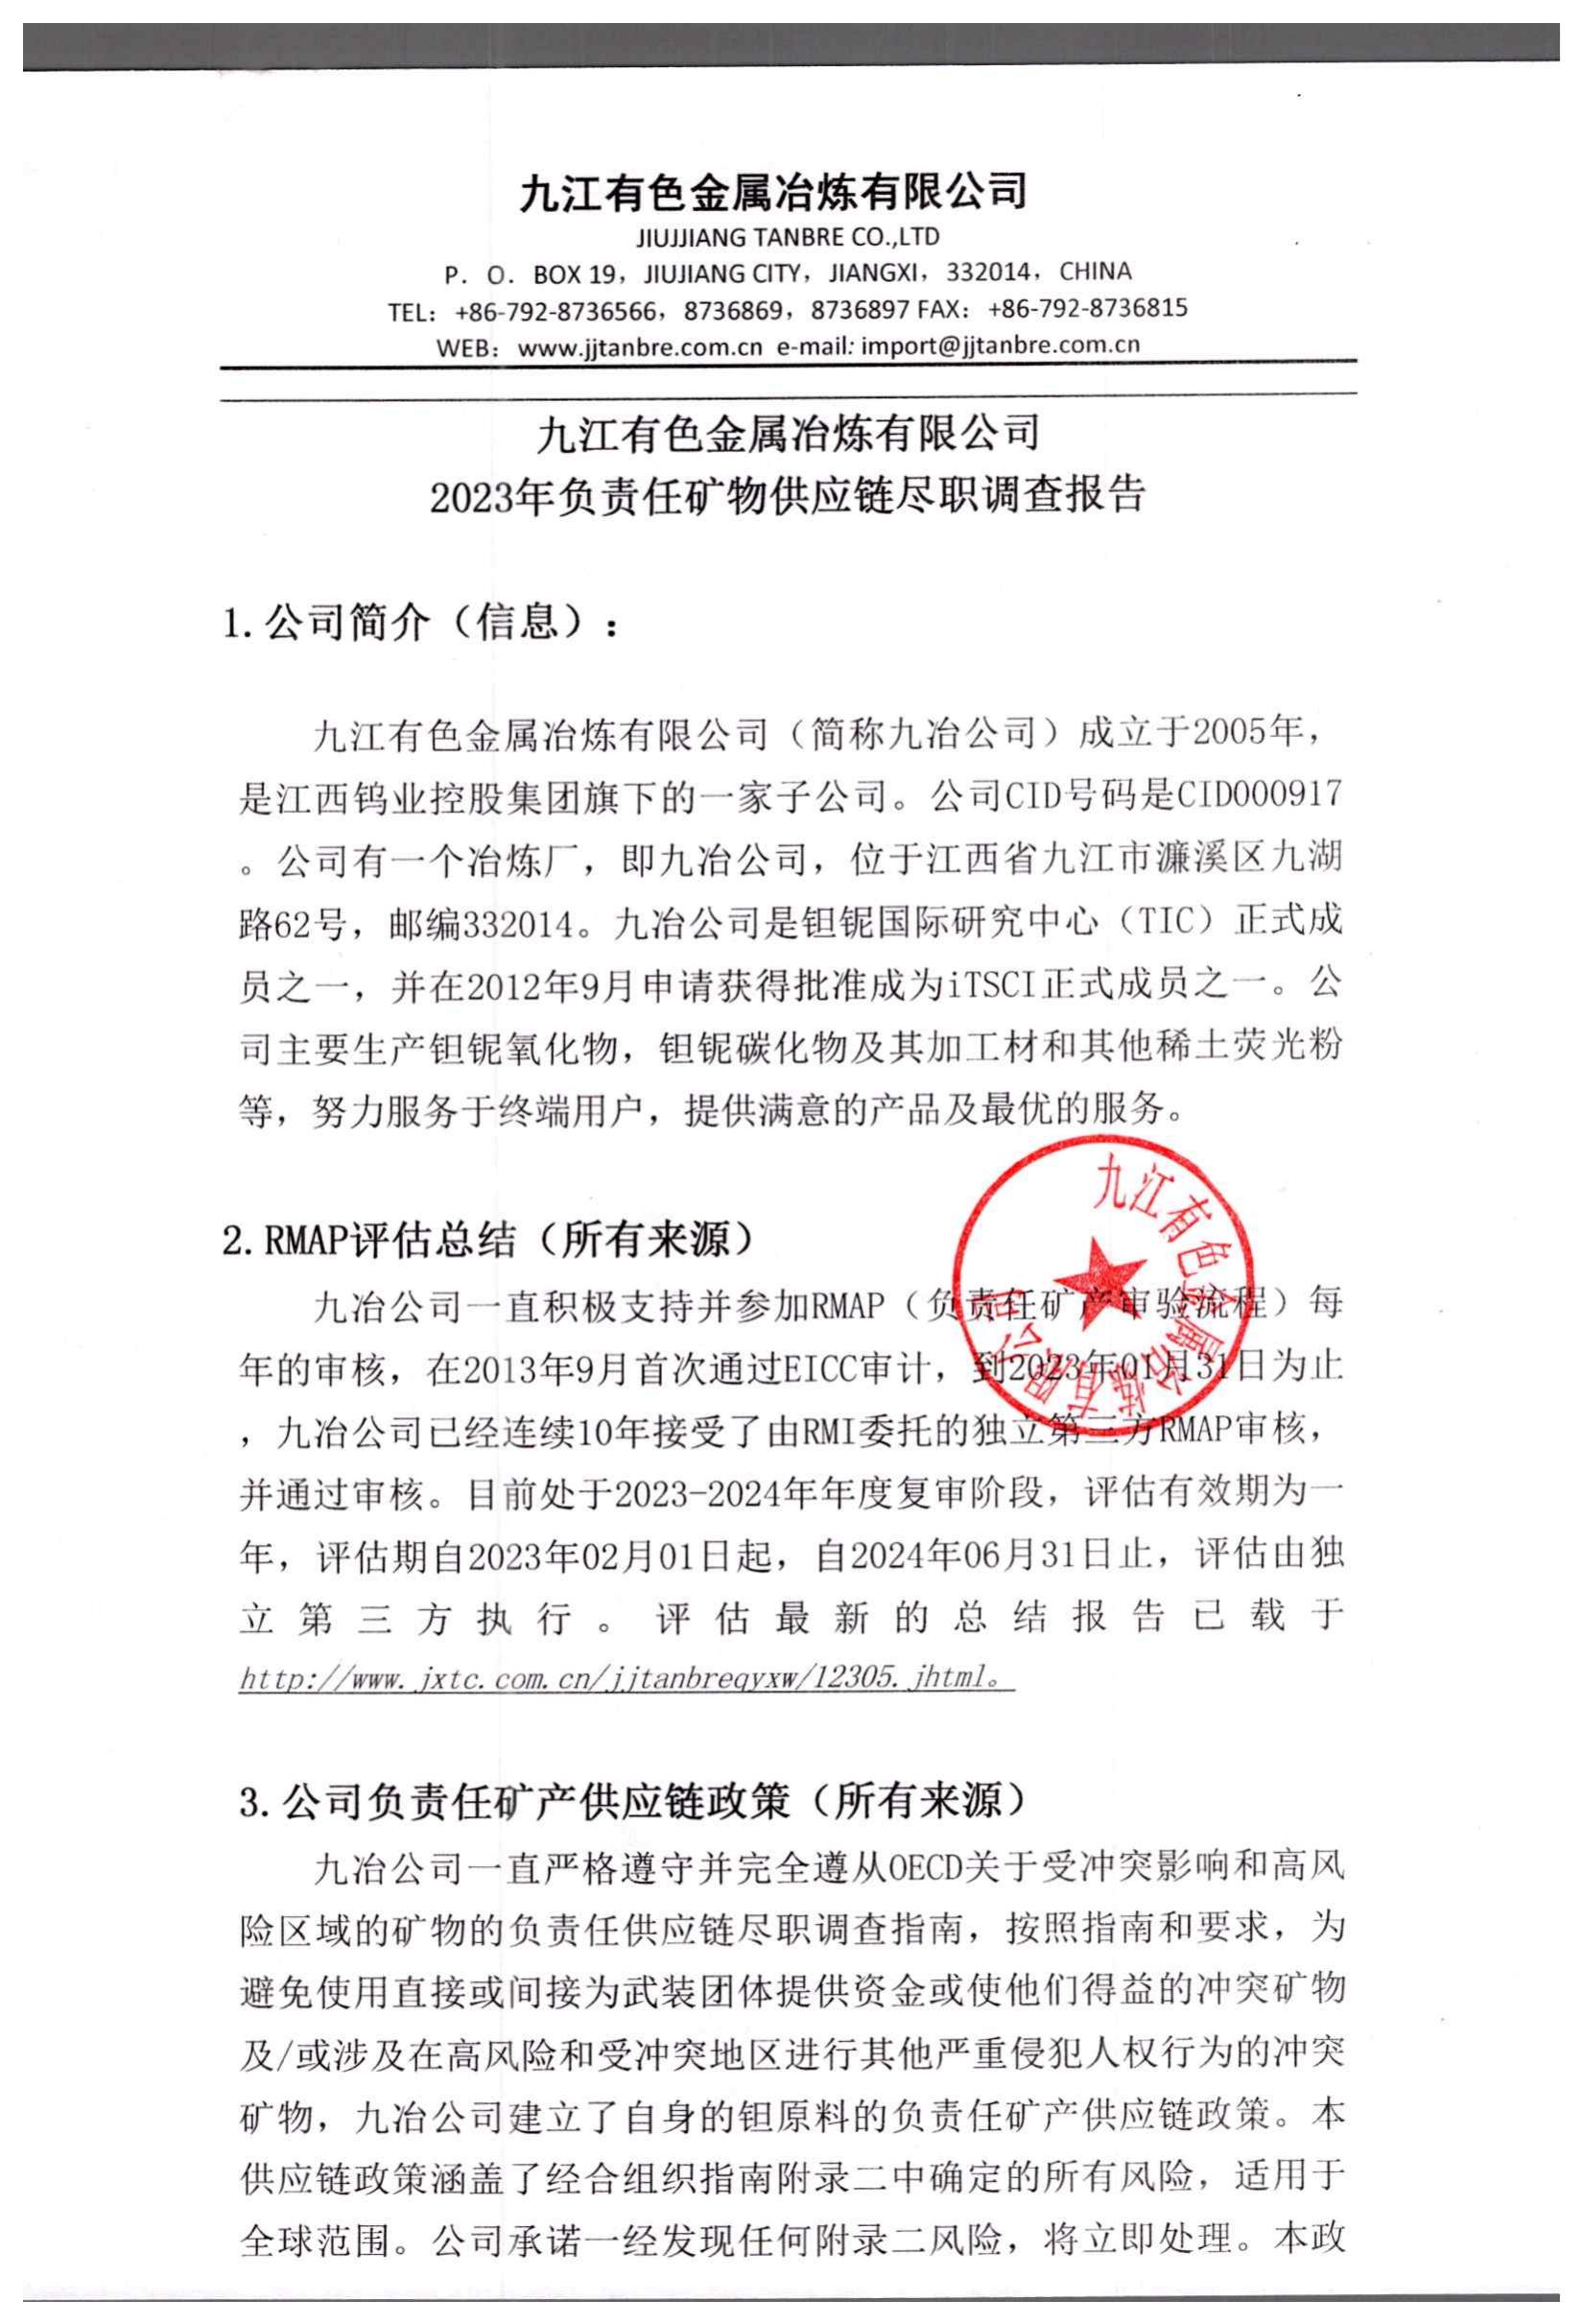 j九江有色金属冶炼有限公司2023年负责任矿物供应链尽职调查报告